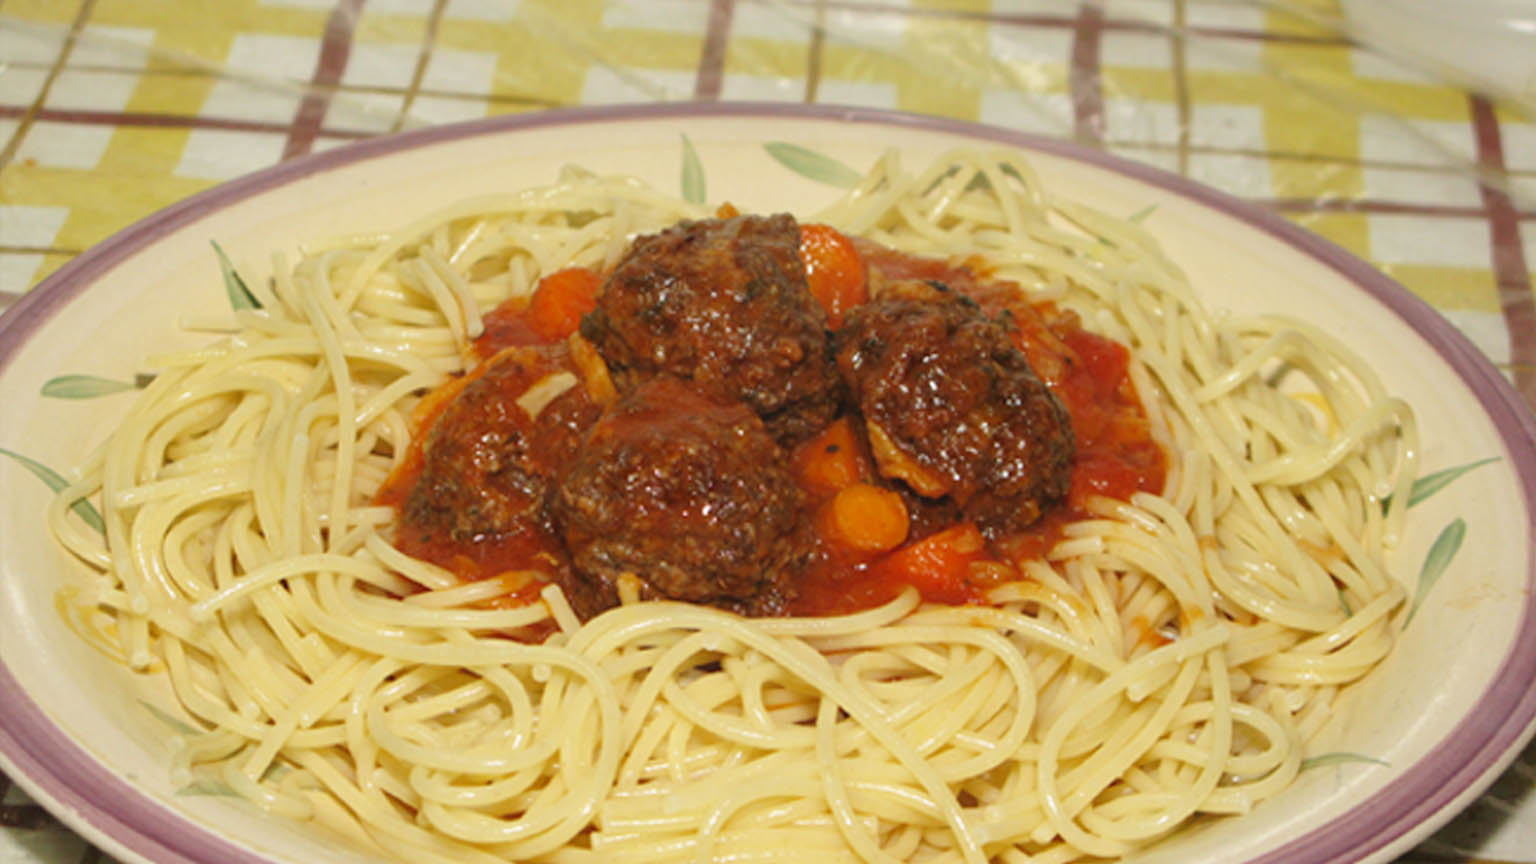 Meatballs Spaghetti